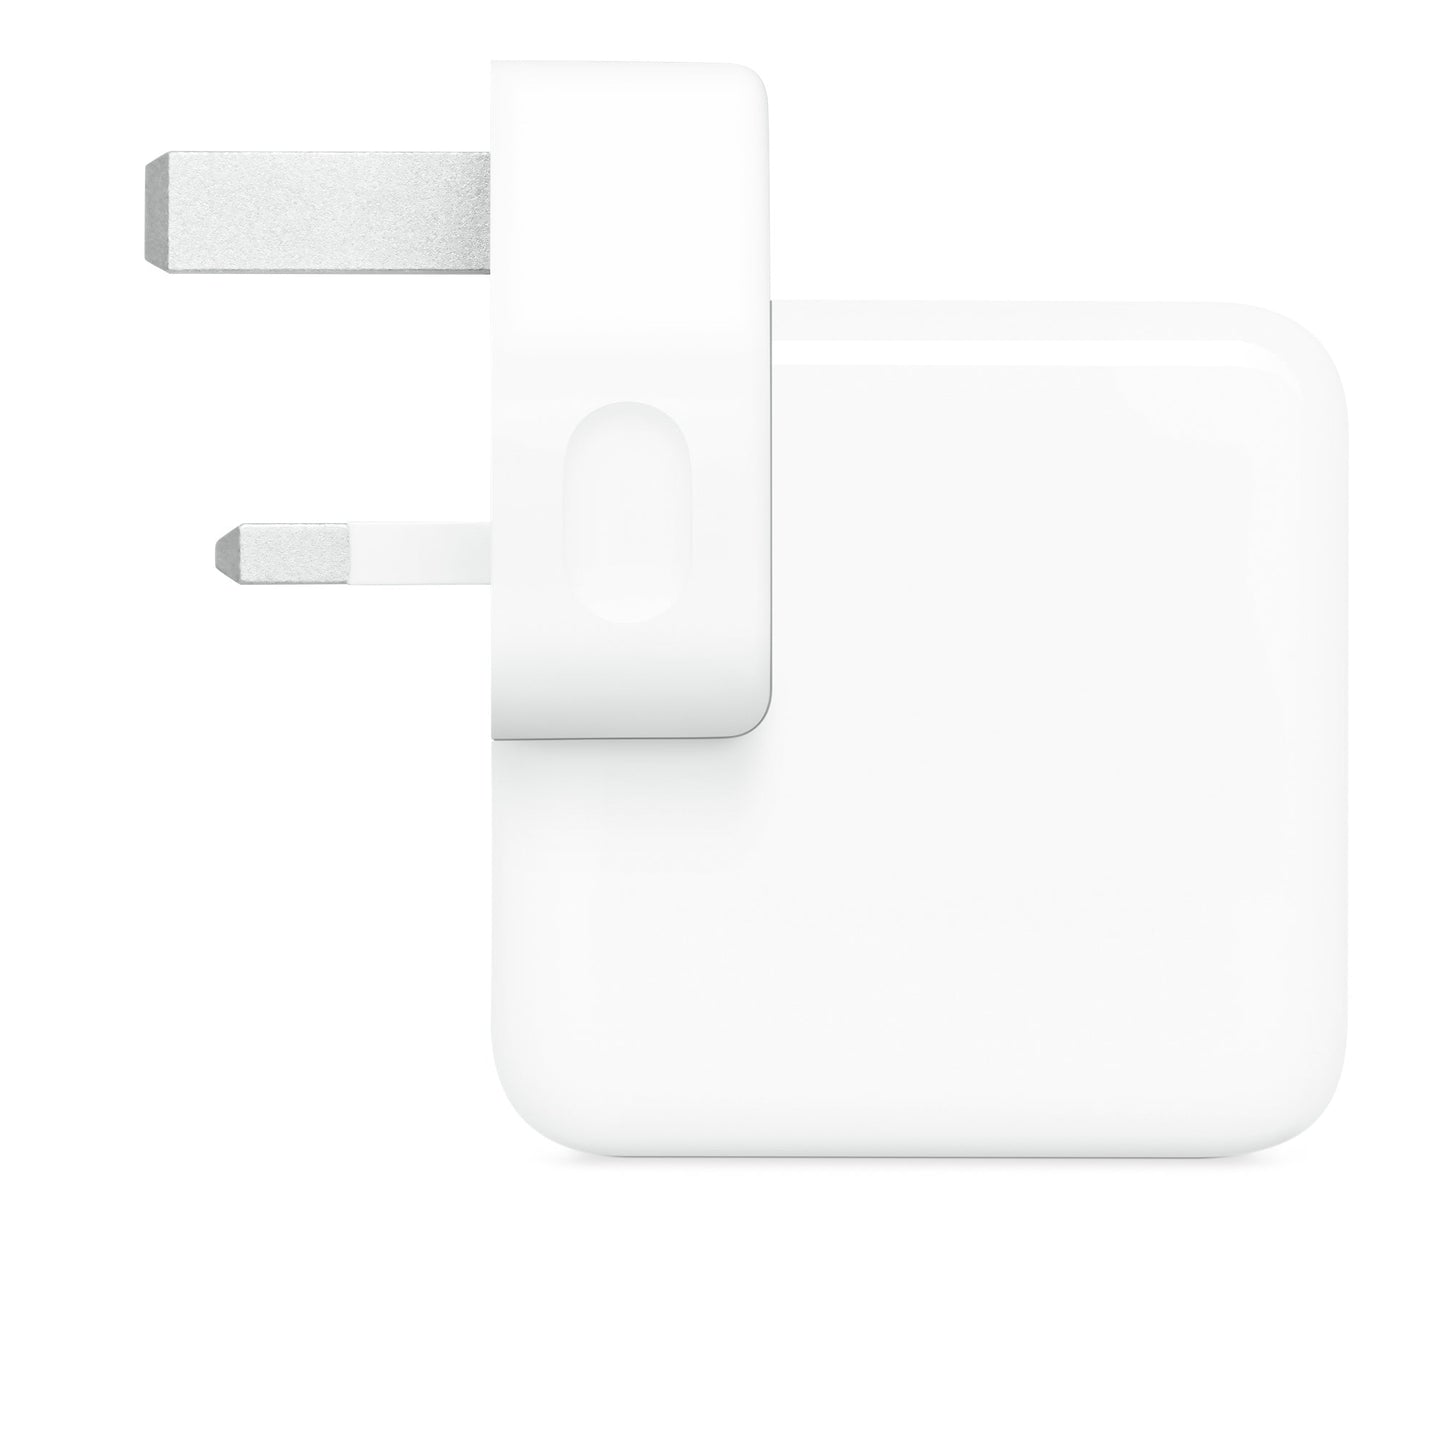 Apple Type-C Power Adapter